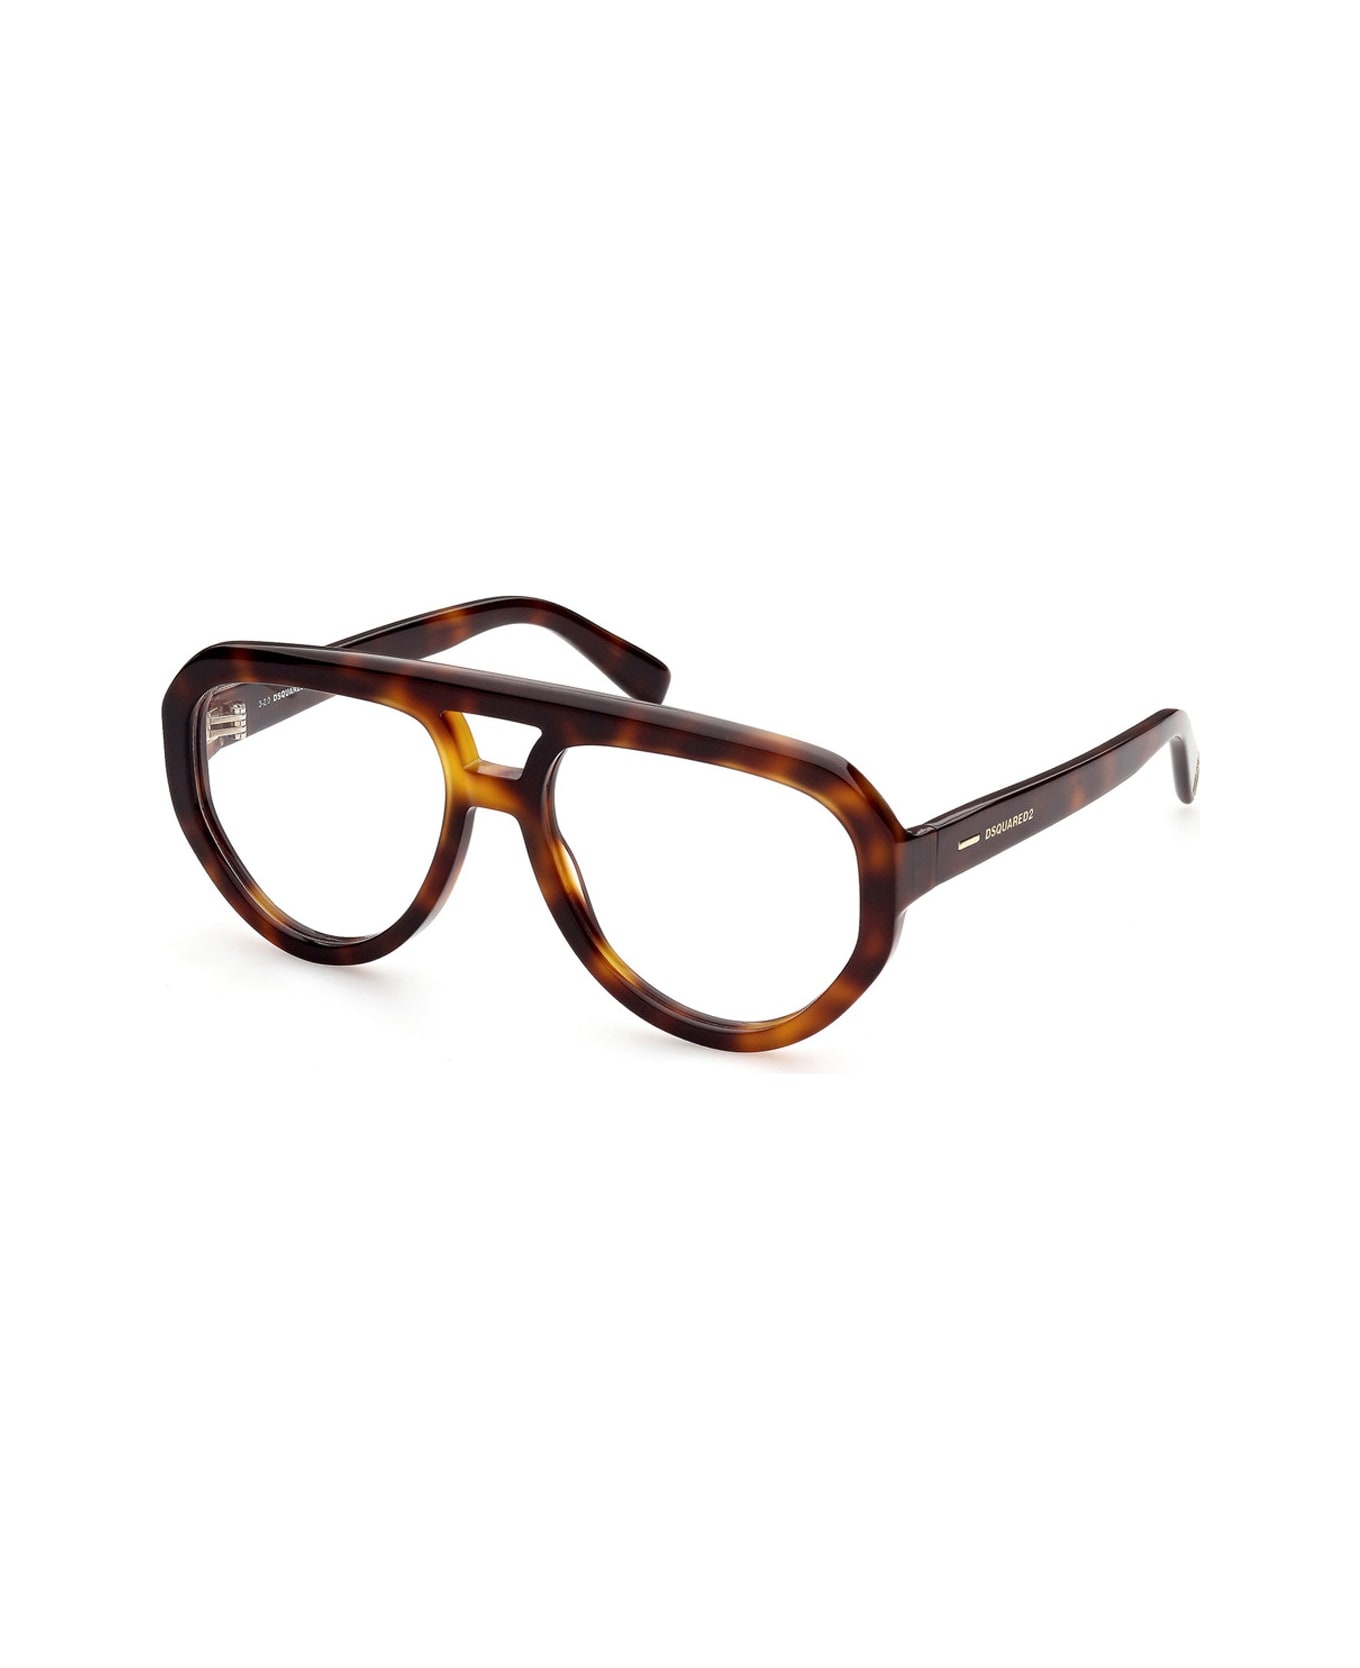 Dsquared2 Eyewear Dq5353 Glasses - Marrone アイウェア